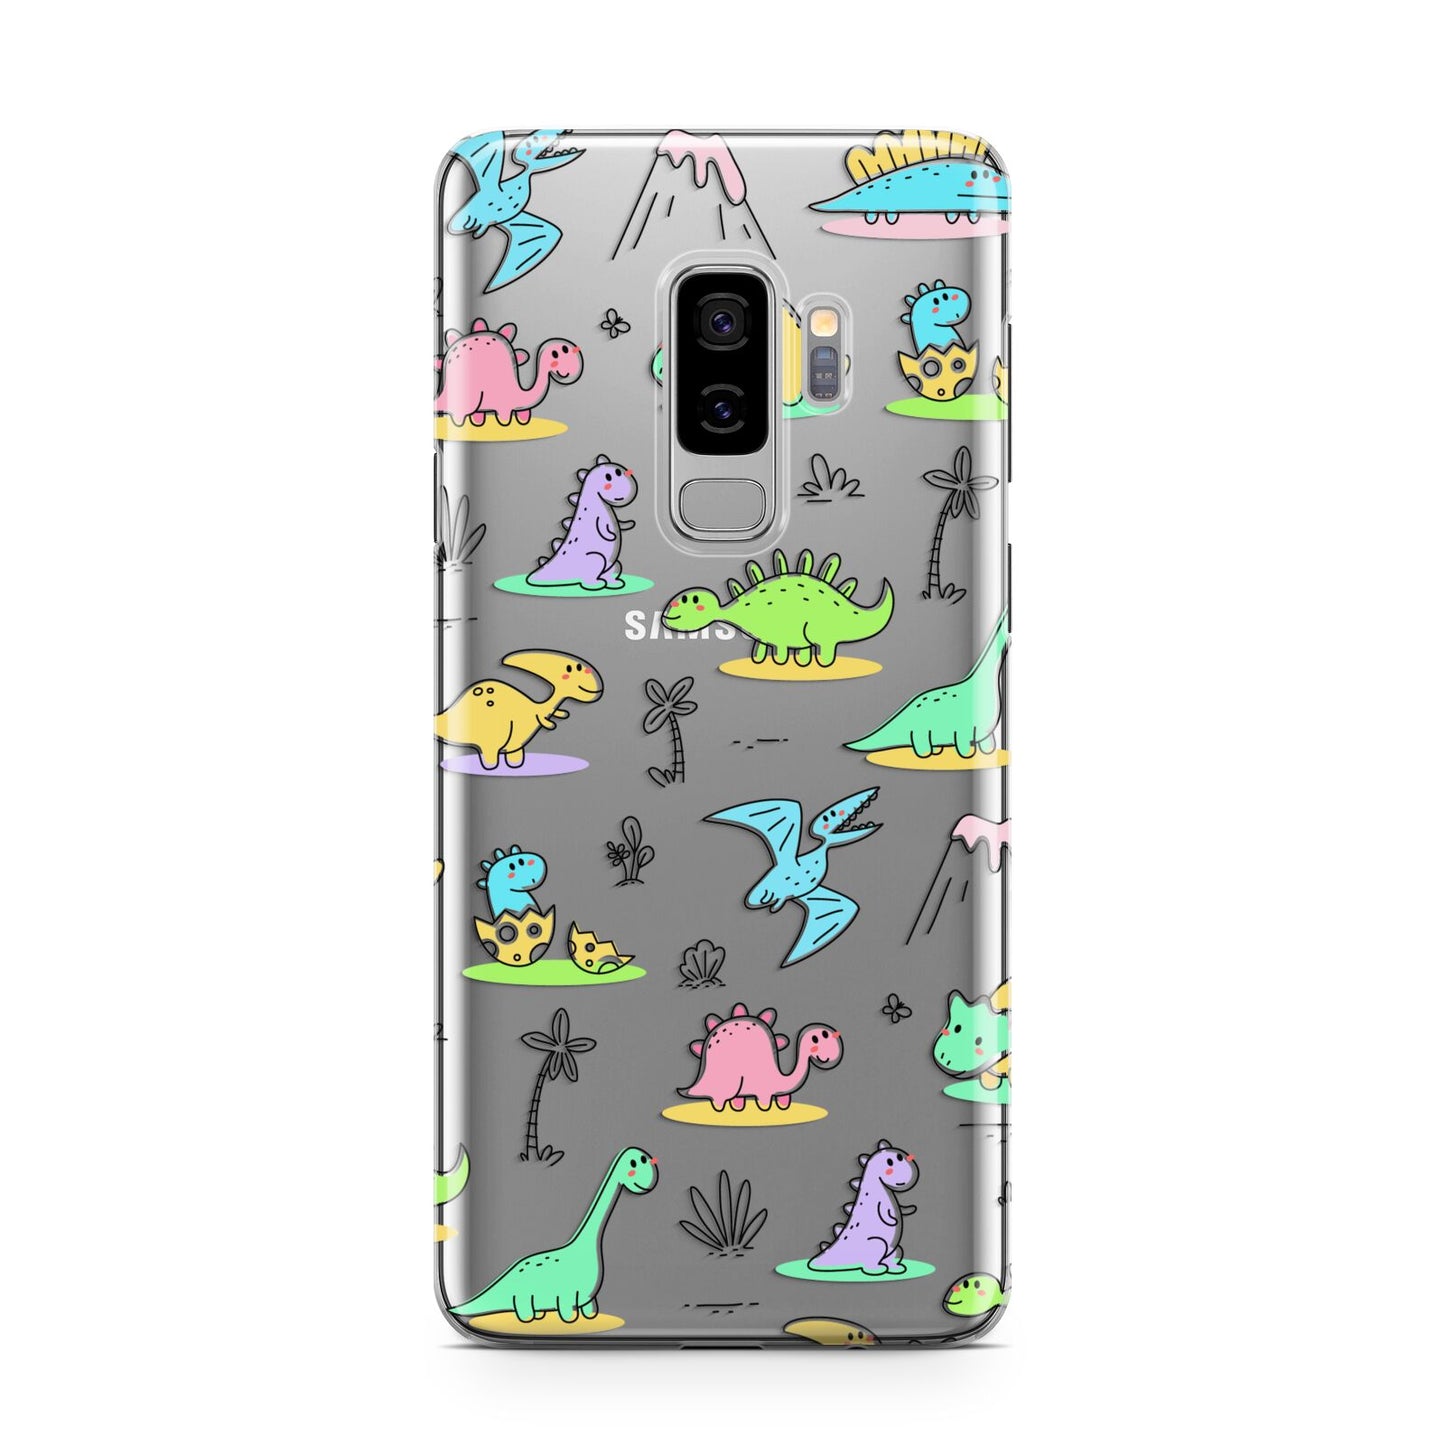 Dinosaur Samsung Galaxy S9 Plus Case on Silver phone